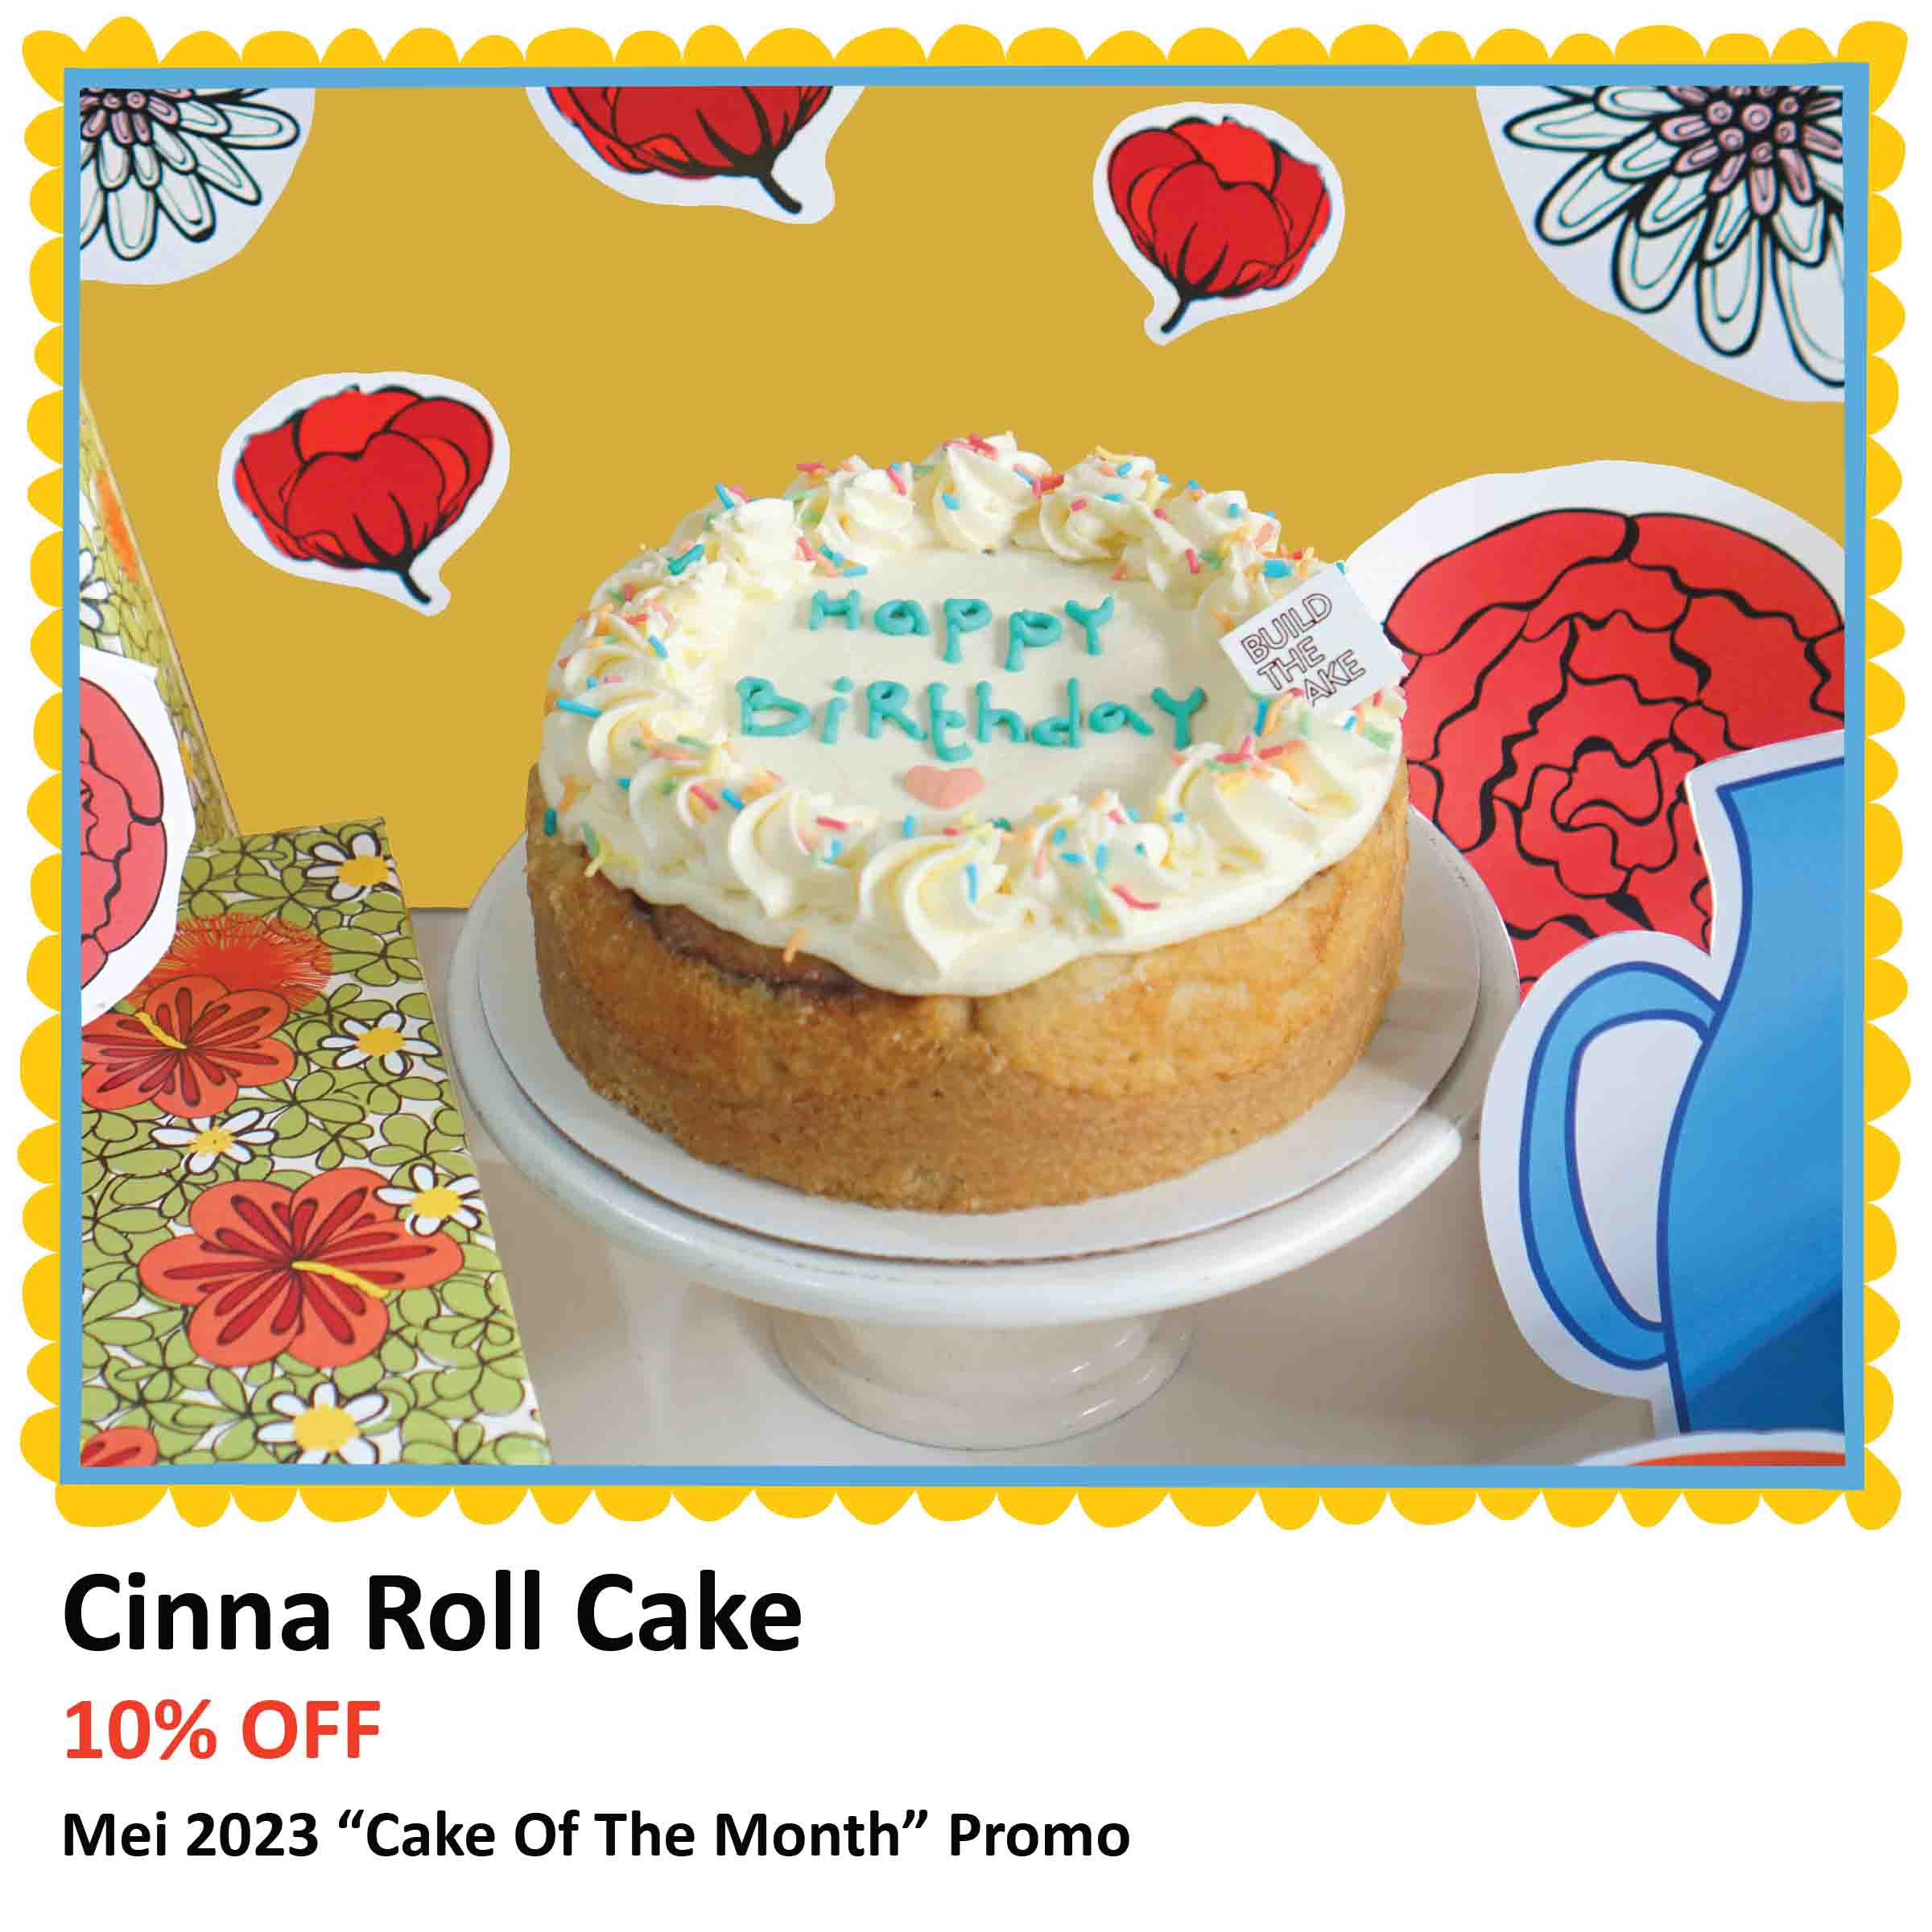 Cinna Roll Cake